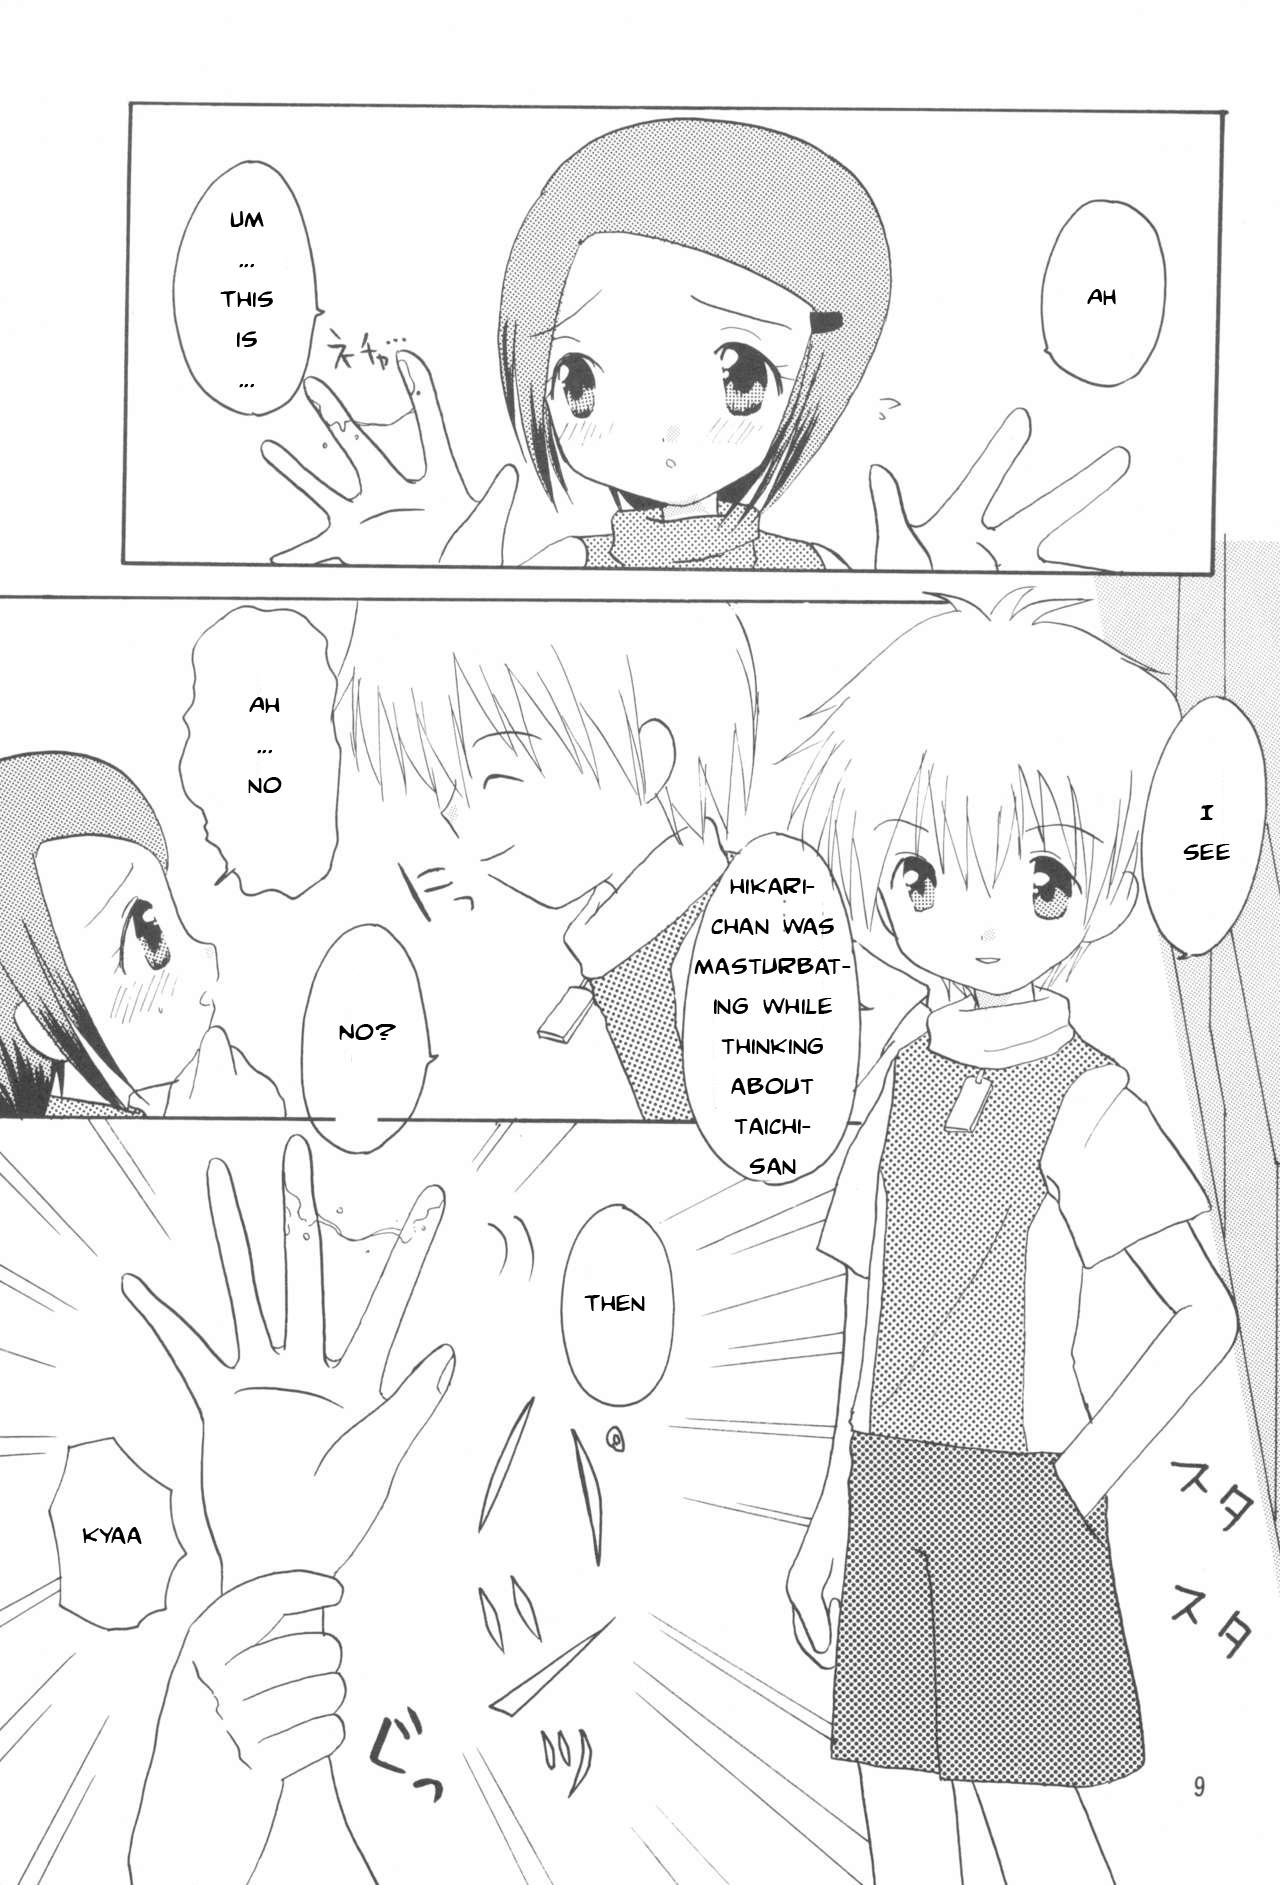 She Hikari Mania - Digimon adventure Insertion - Page 8